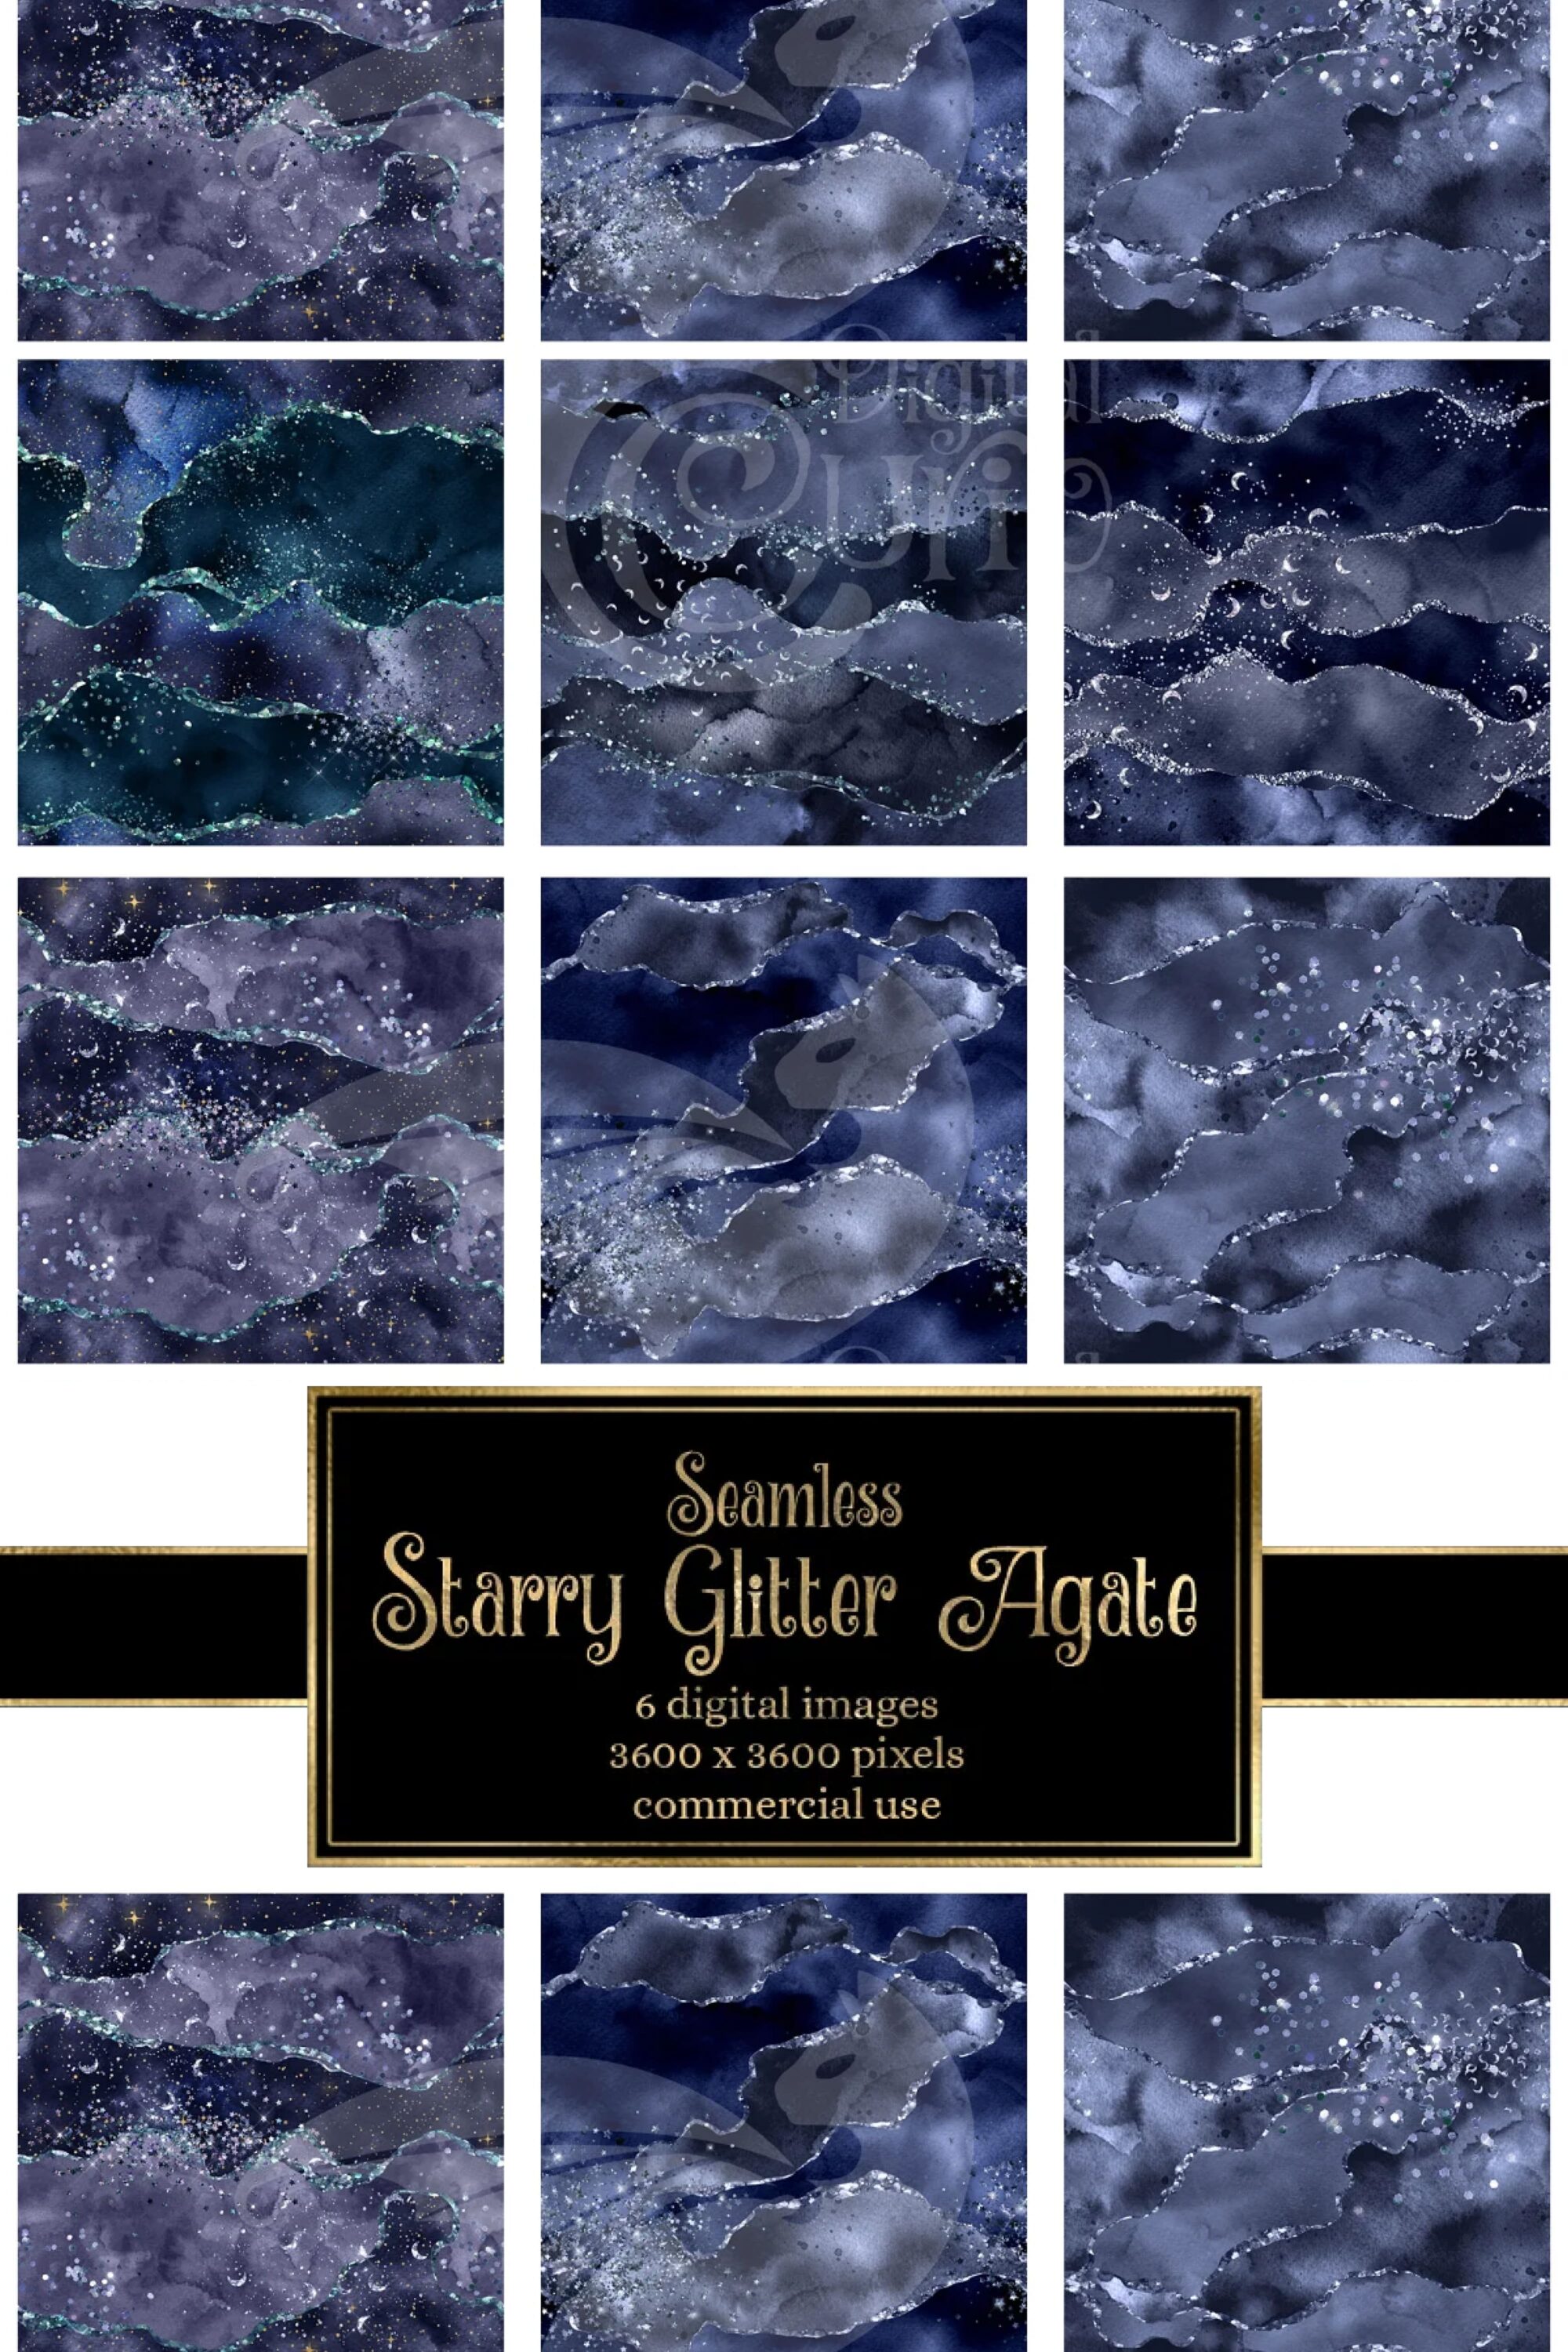 Starry Glitter Agate Textures pinterest image.